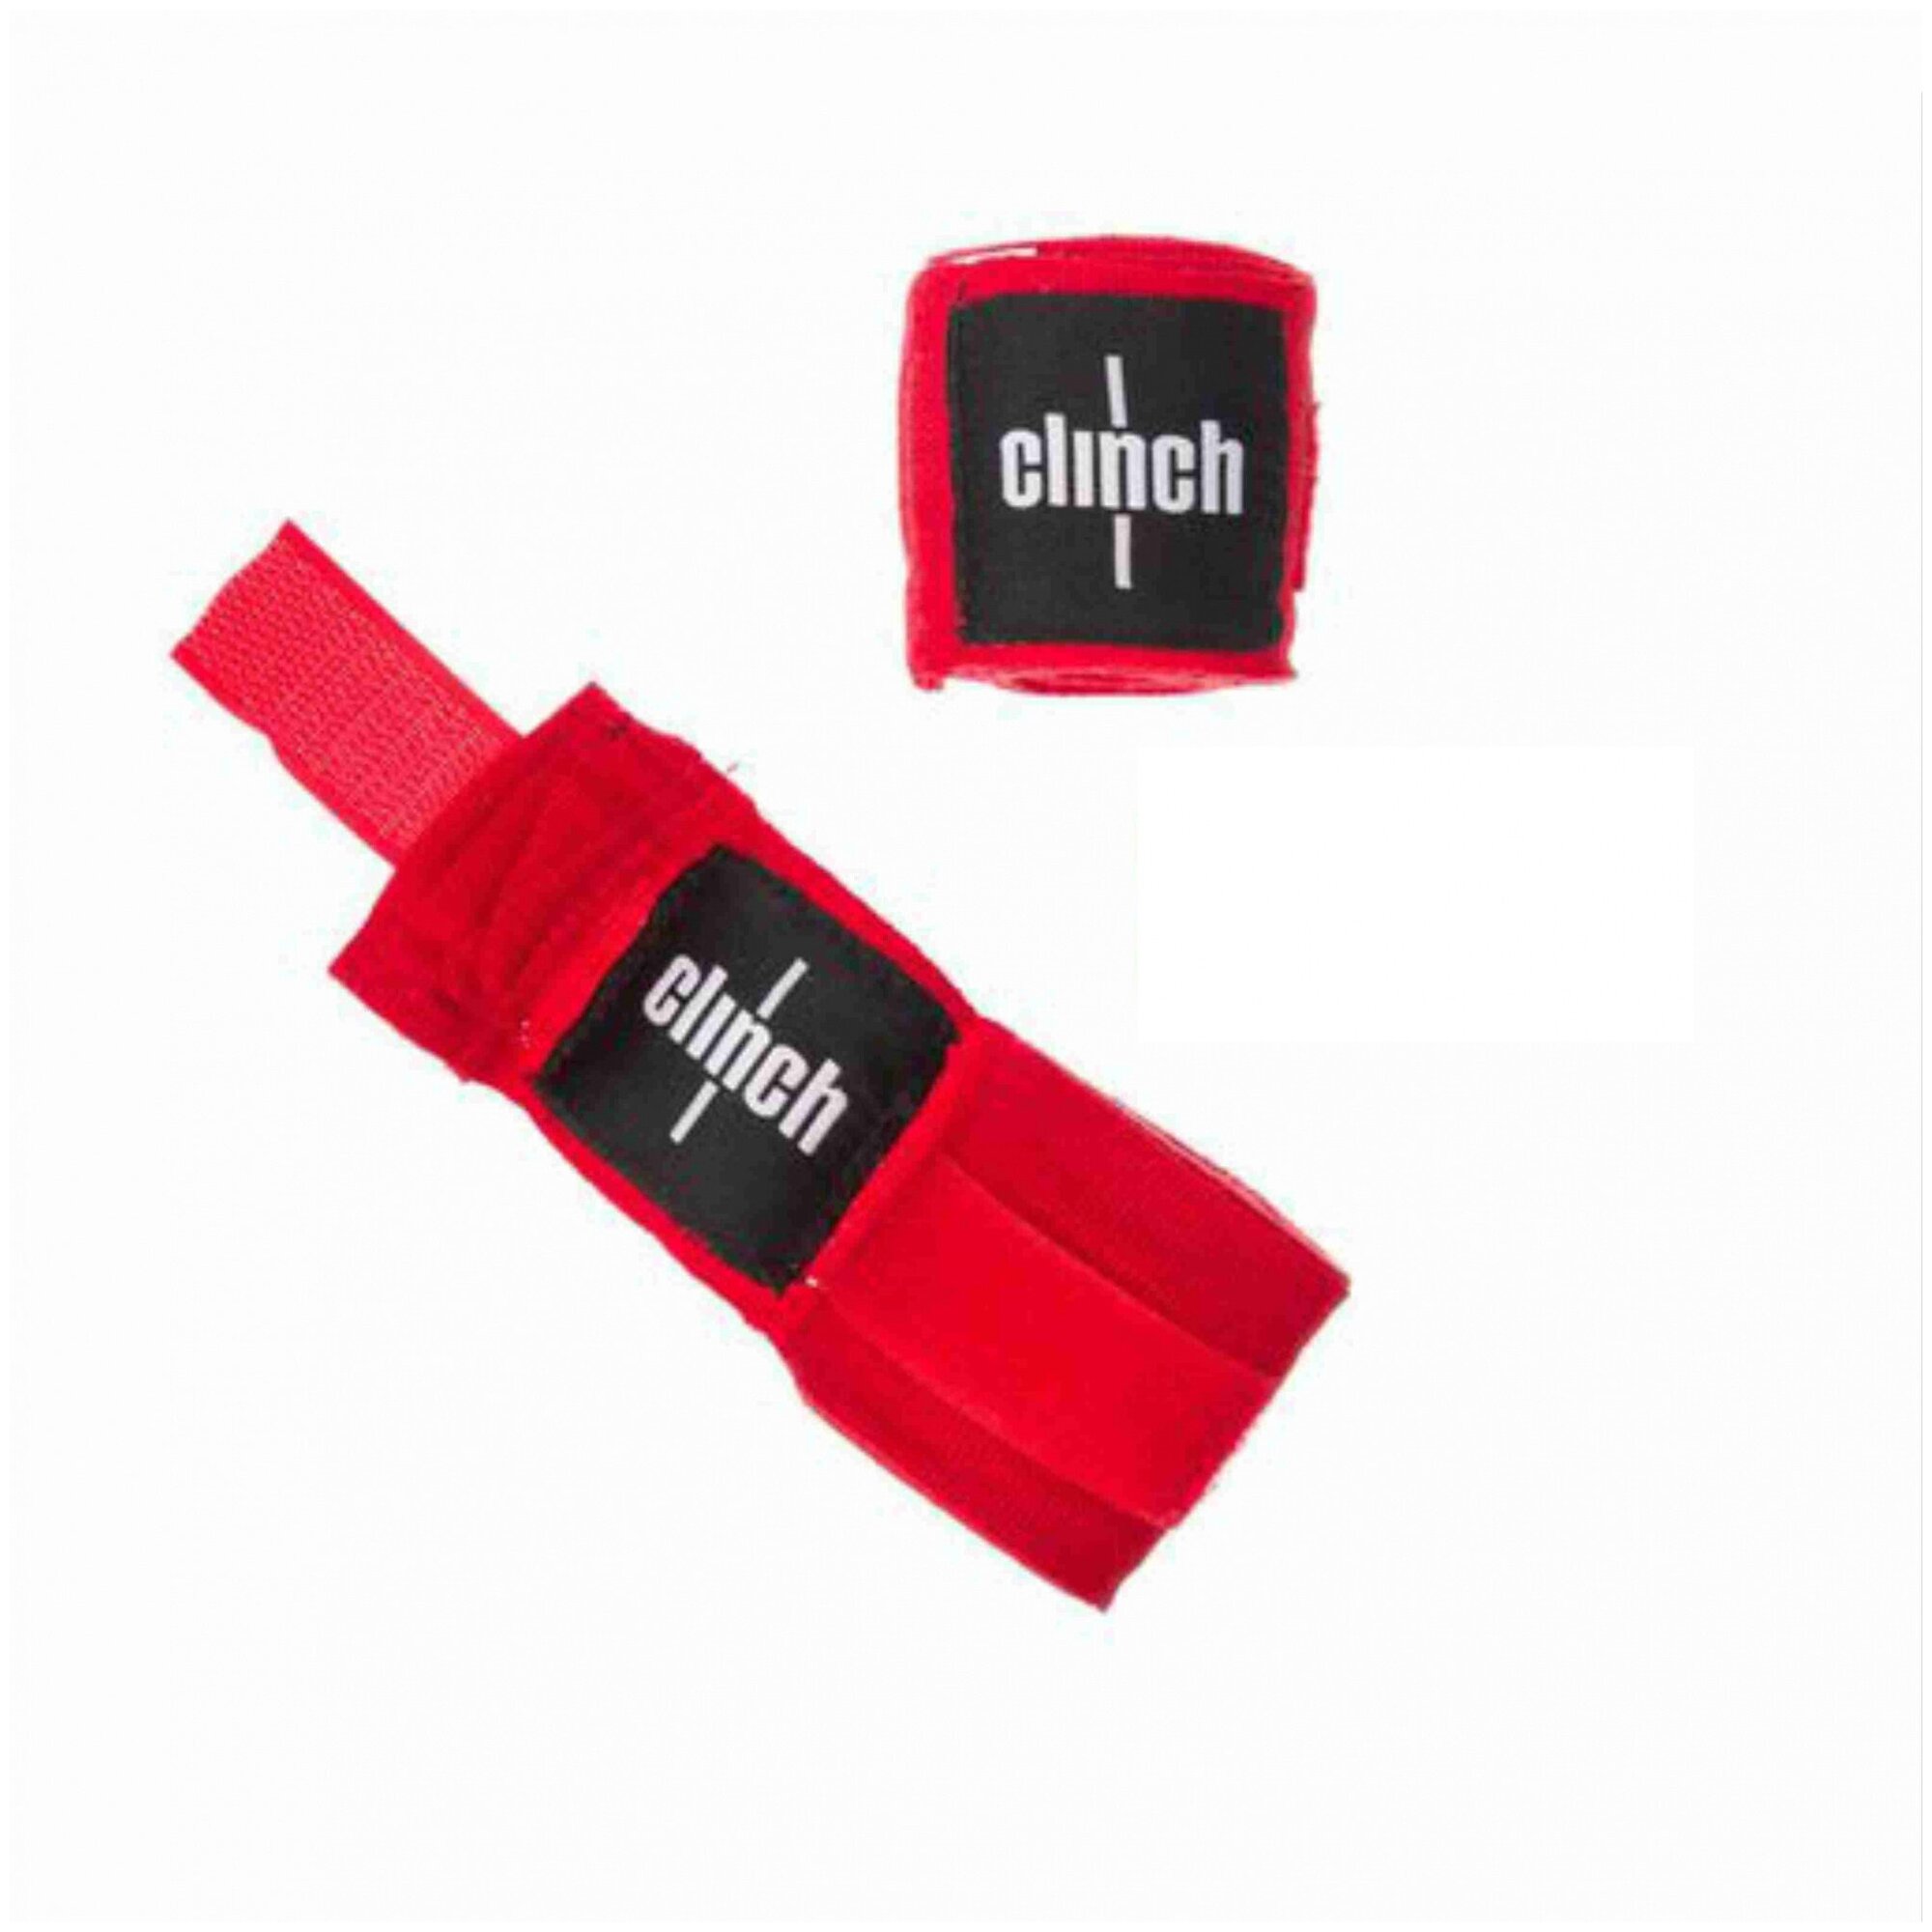 C139 Бинты эластичные Clinch Boxing Crepe Bandage Punch красные - Clinch - Красный - 3,5 м.